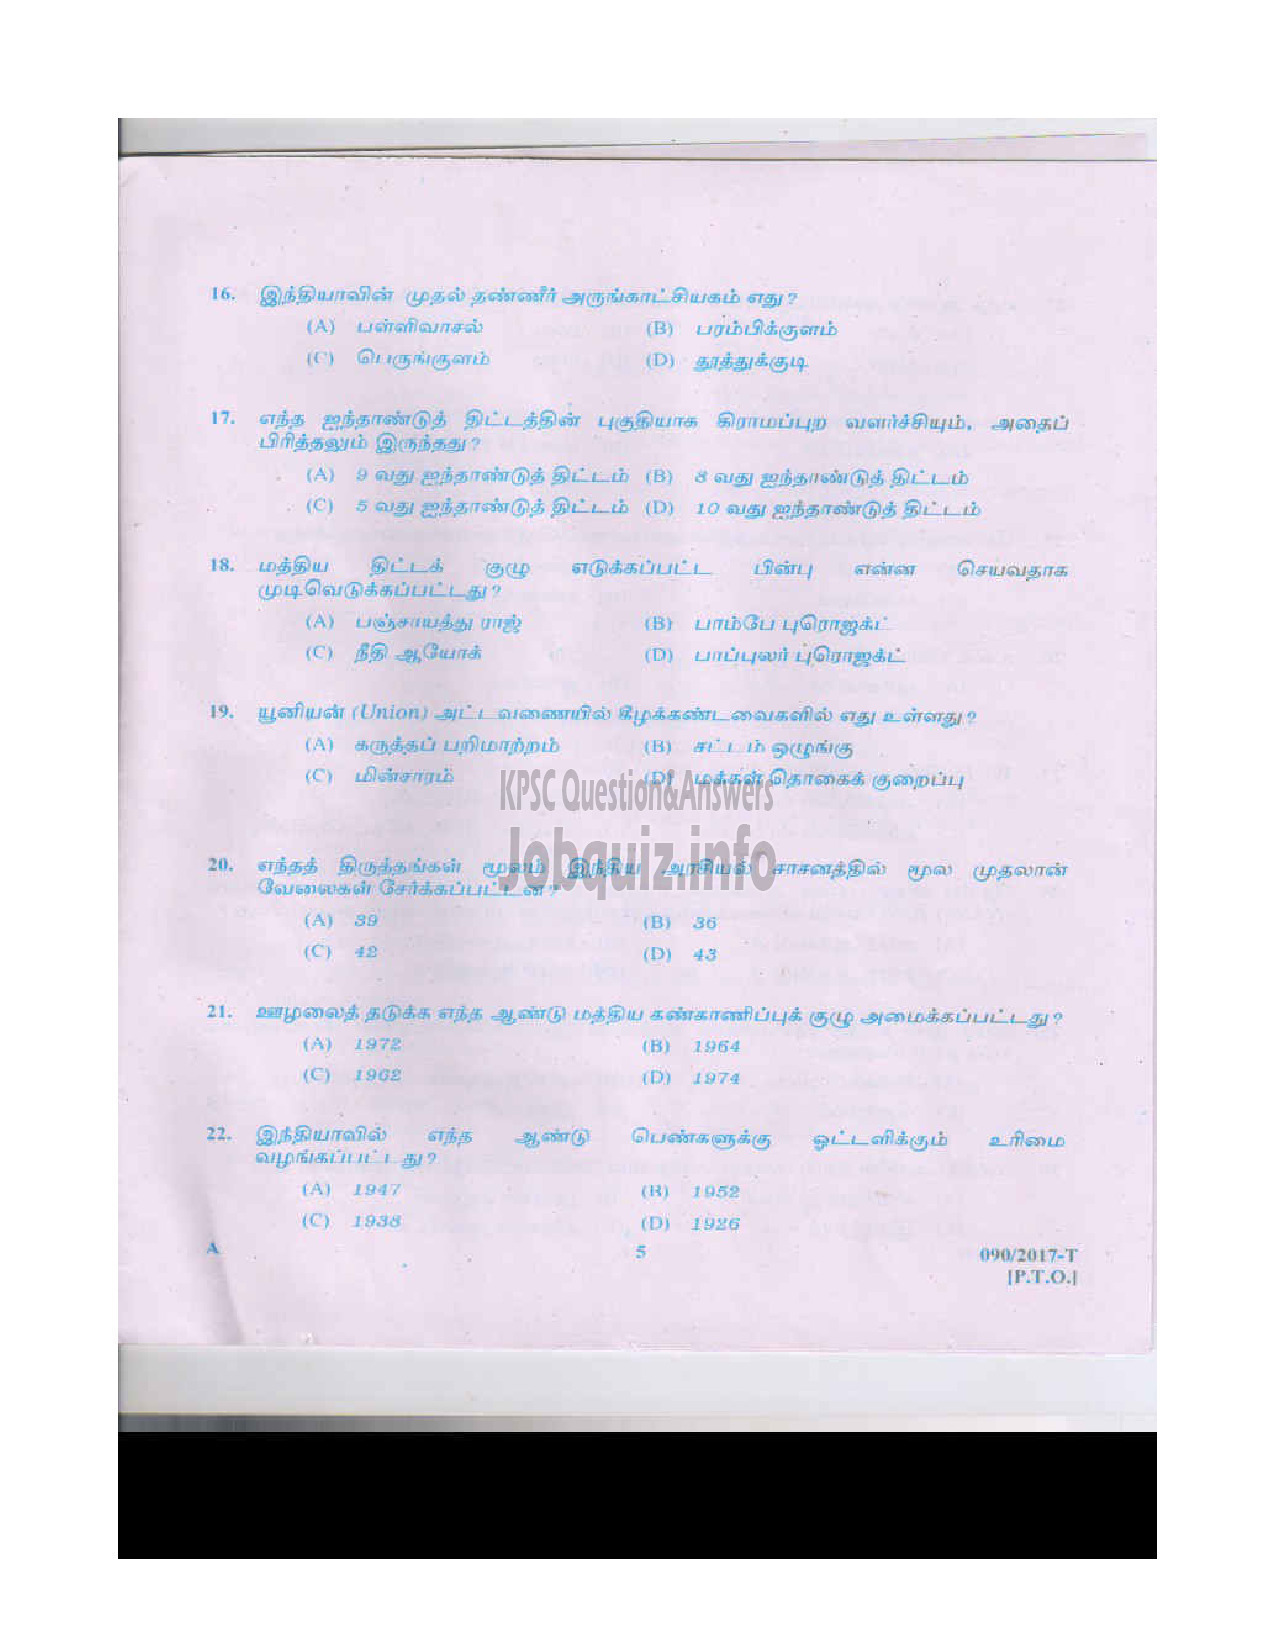 Kerala PSC Question Paper - LDCLERK VARIOUS BY TRANSFER TAMIL/ENGLISH-4